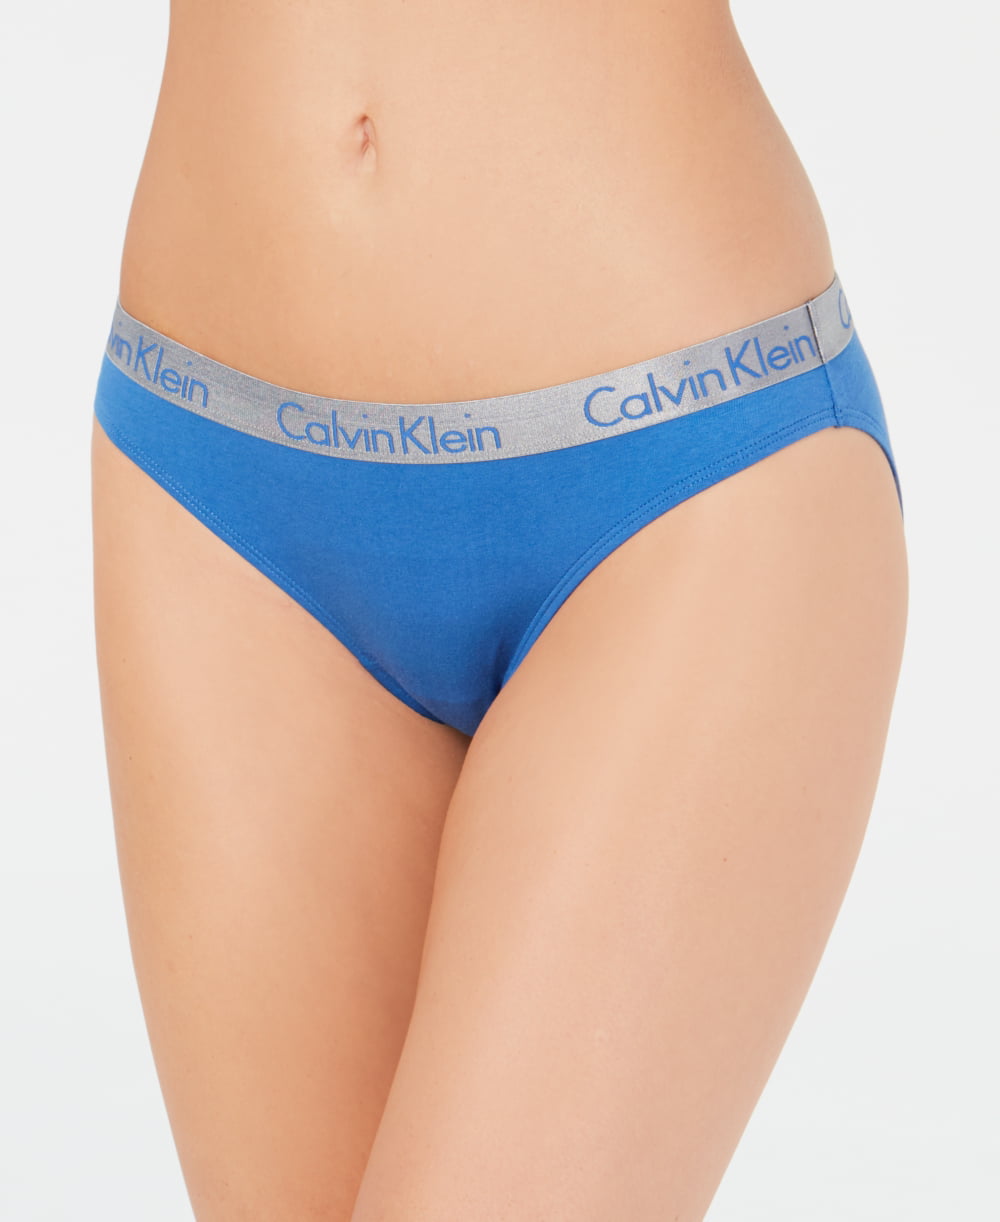 Calvin Klein Cotton Bikini (Dark Blue, XS) - Walmart.com